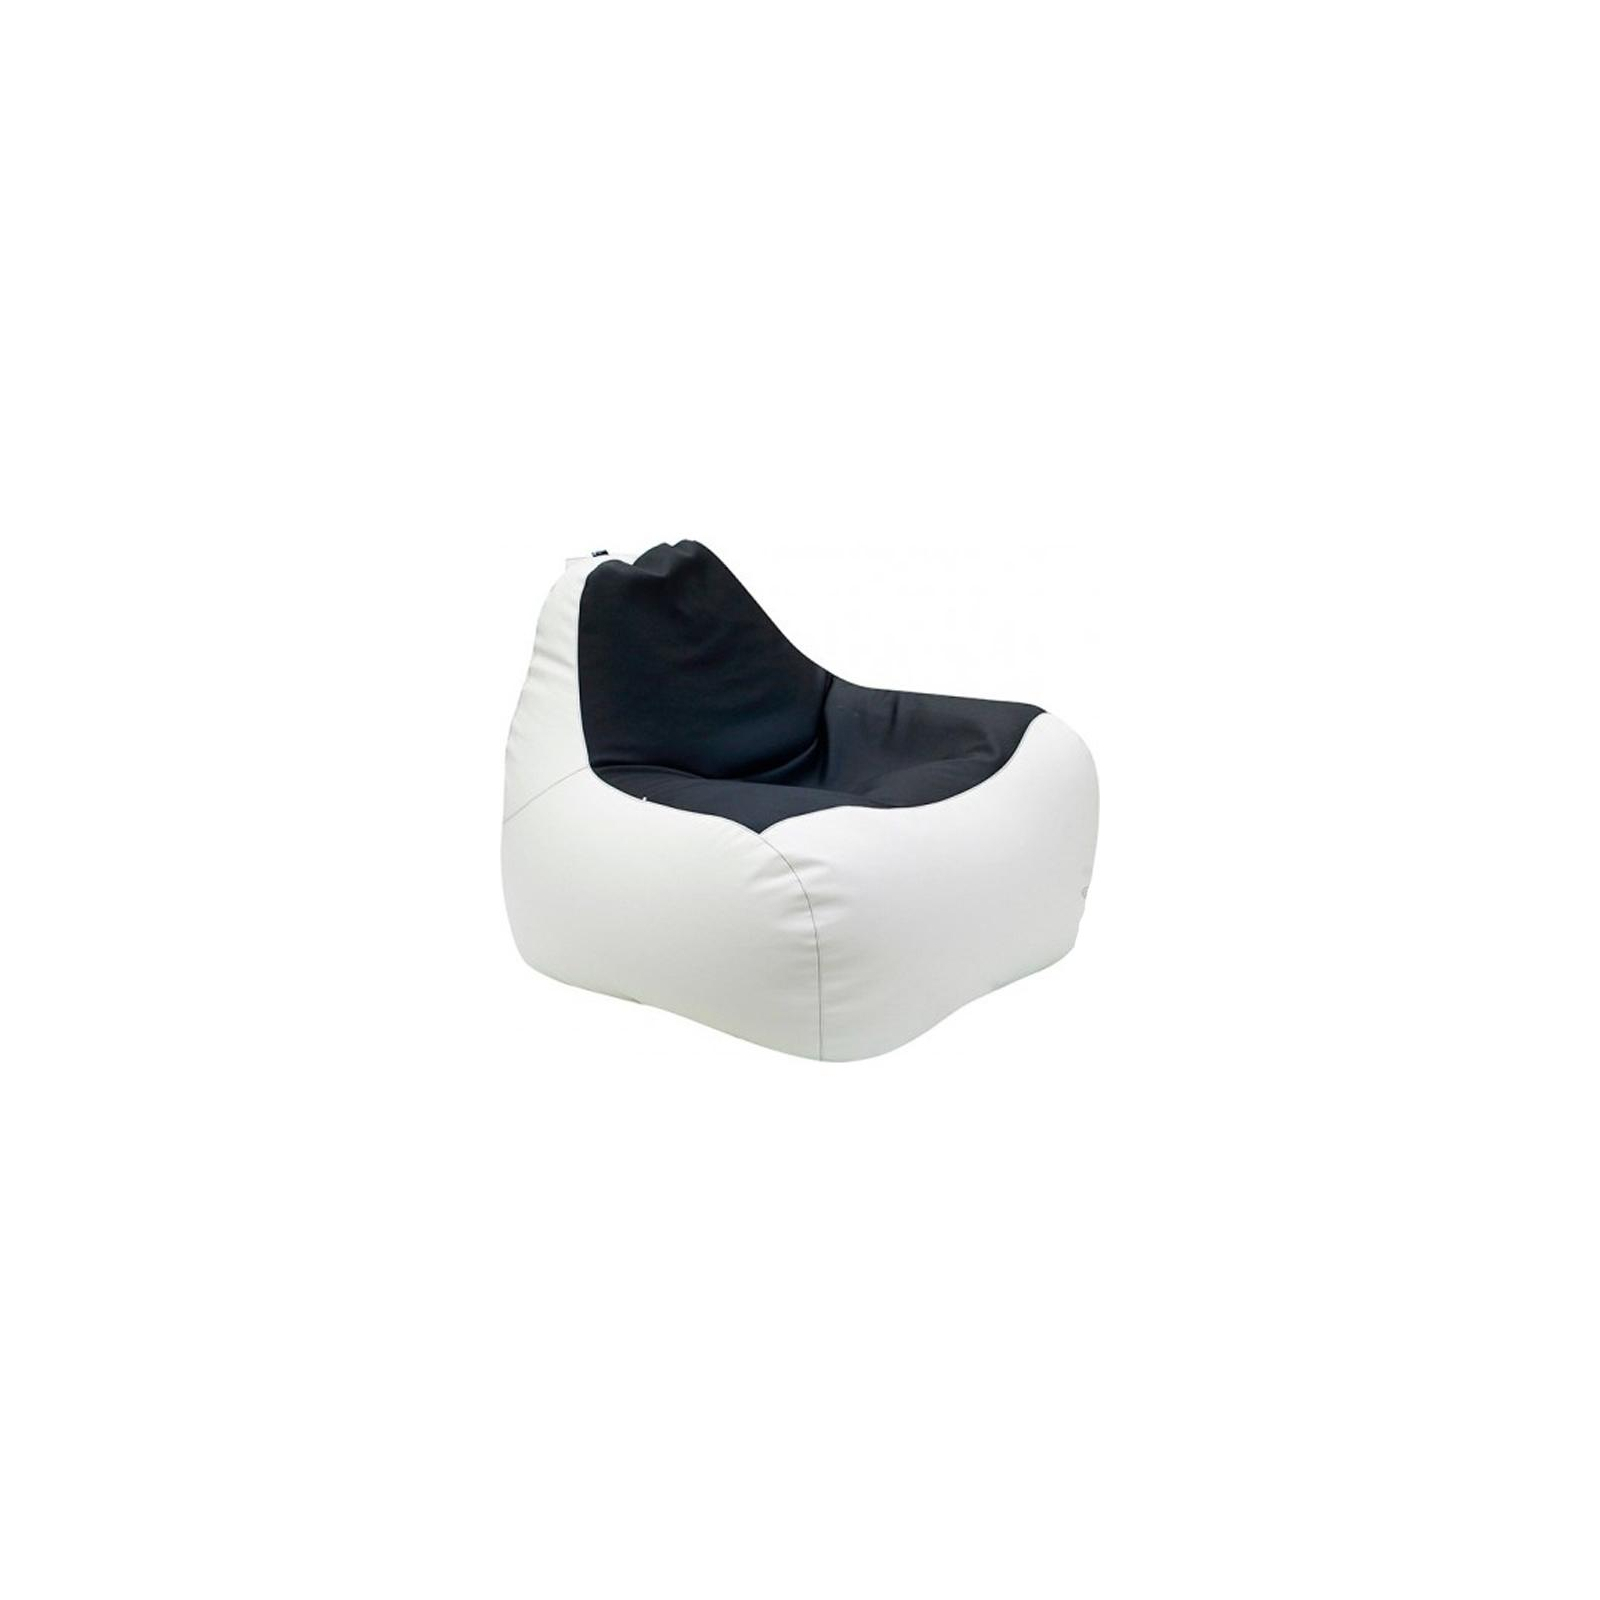 Крісло-мішок Примтекс плюс кресло-груша Simba H-2200/D-5 М White-Black (Simba H-2200/D-5 М White-Black)